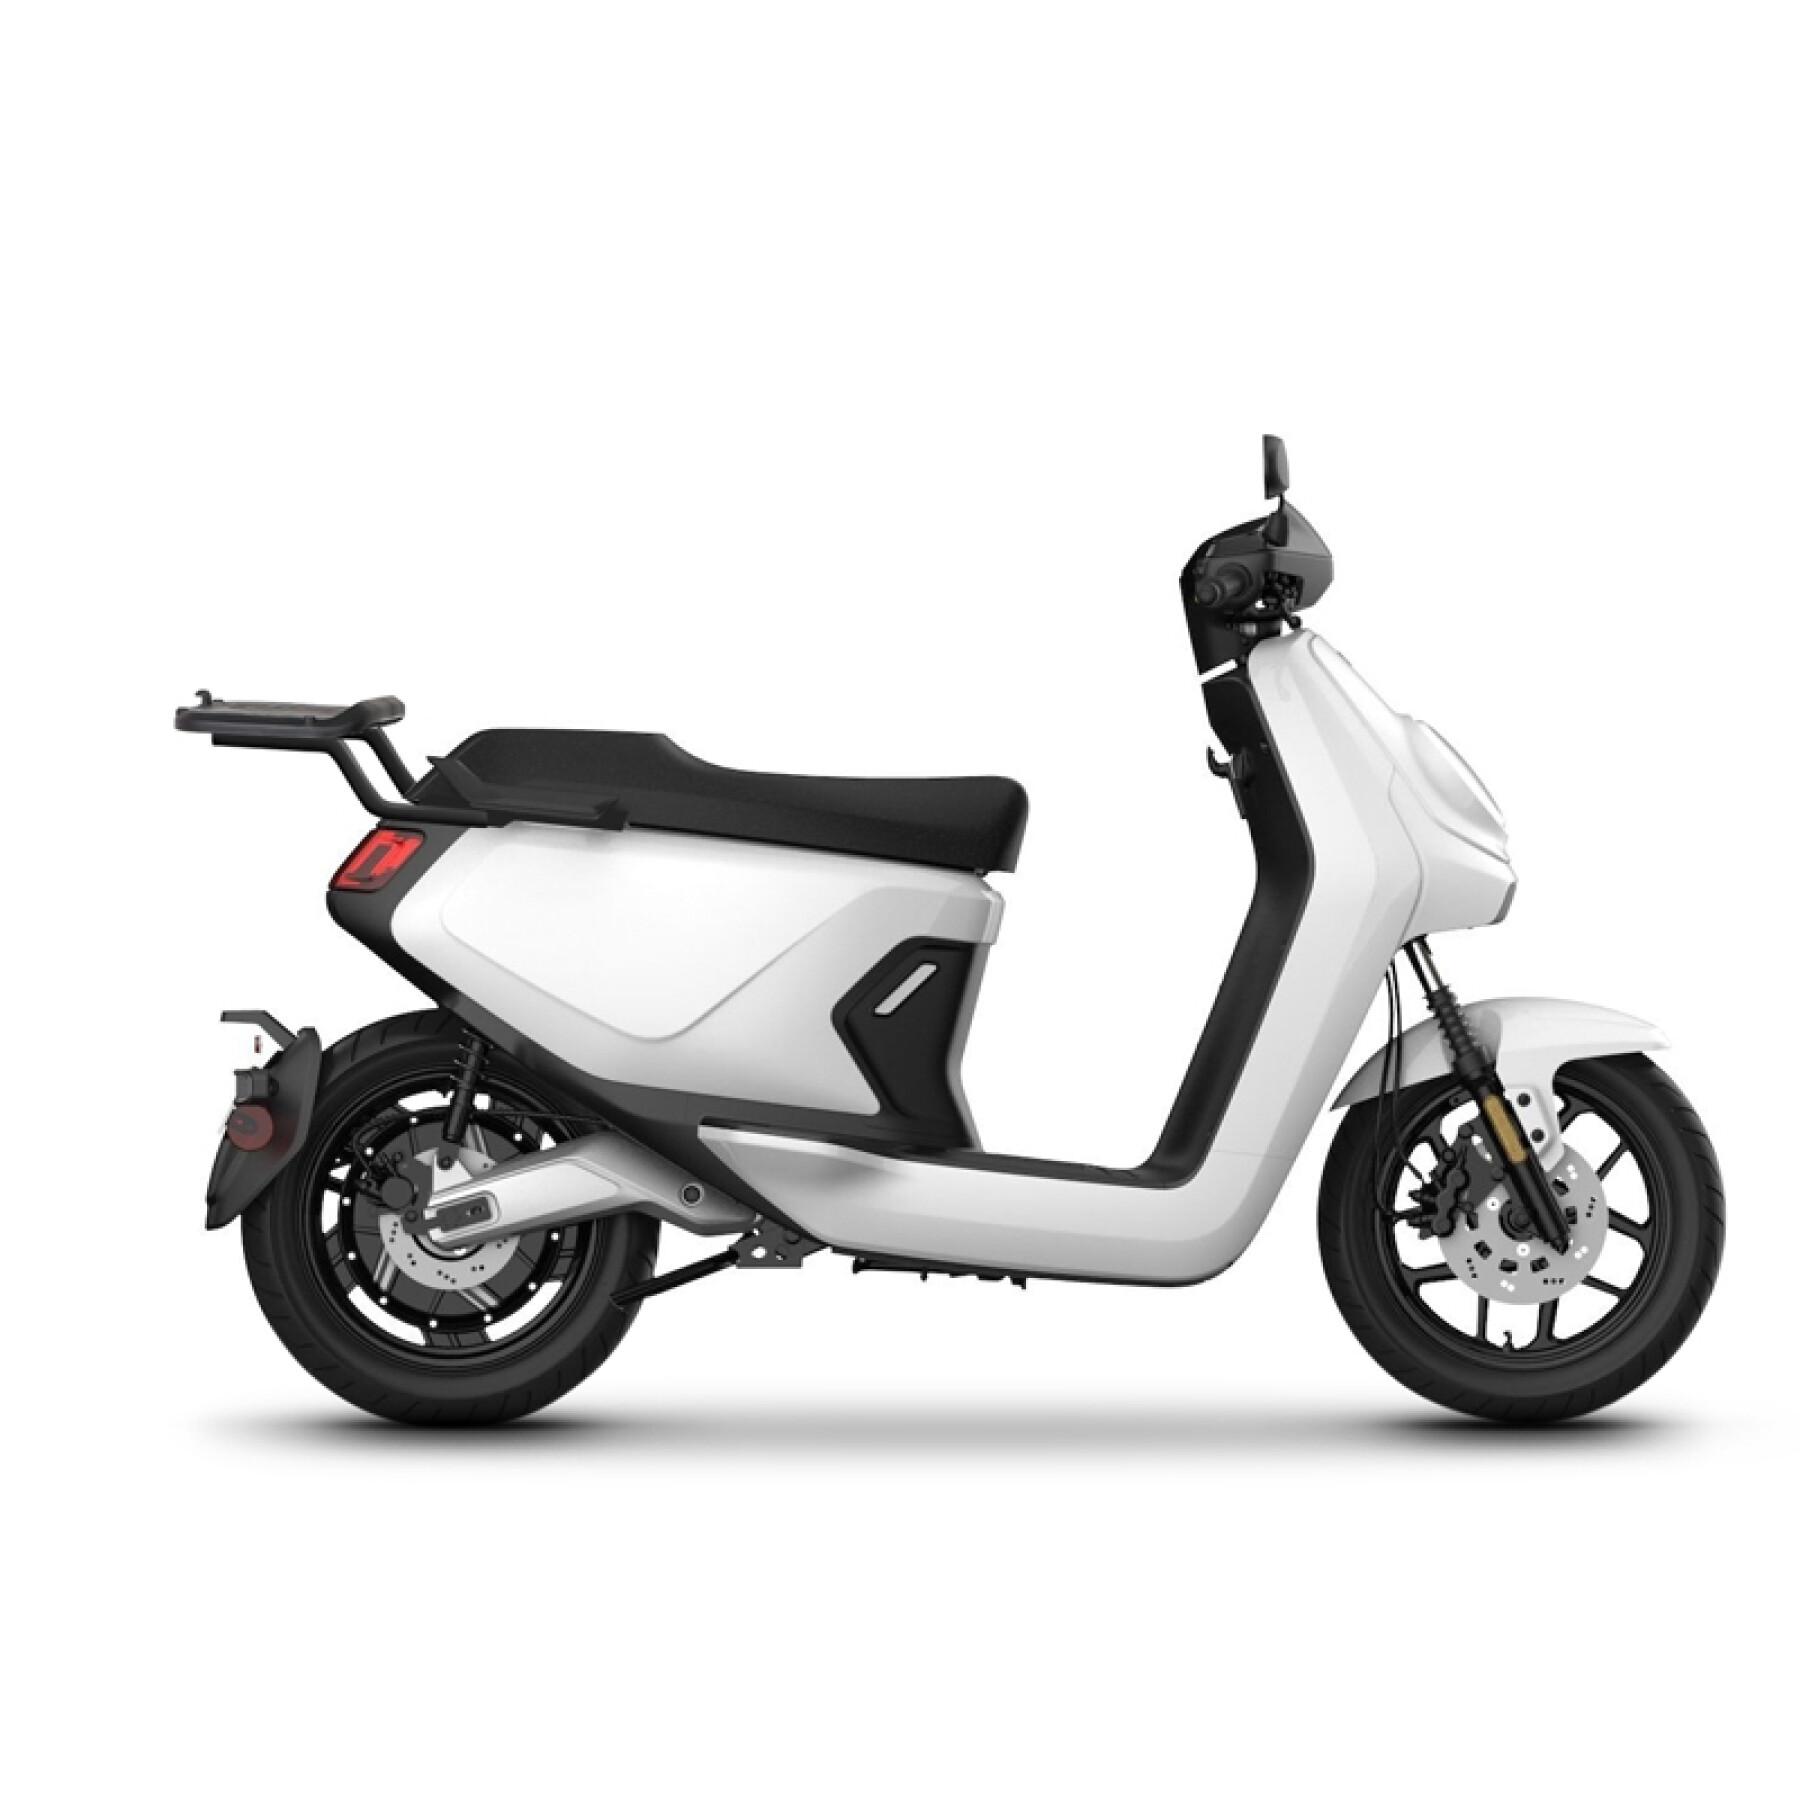 Halter Top Case Scooter Shad Niu Mqigt electrica 2021-2021